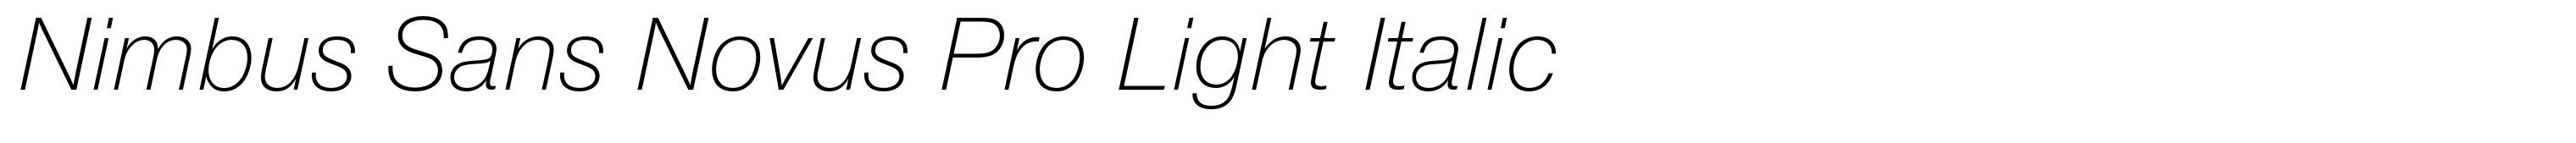 Nimbus Sans Novus Pro Light Italic